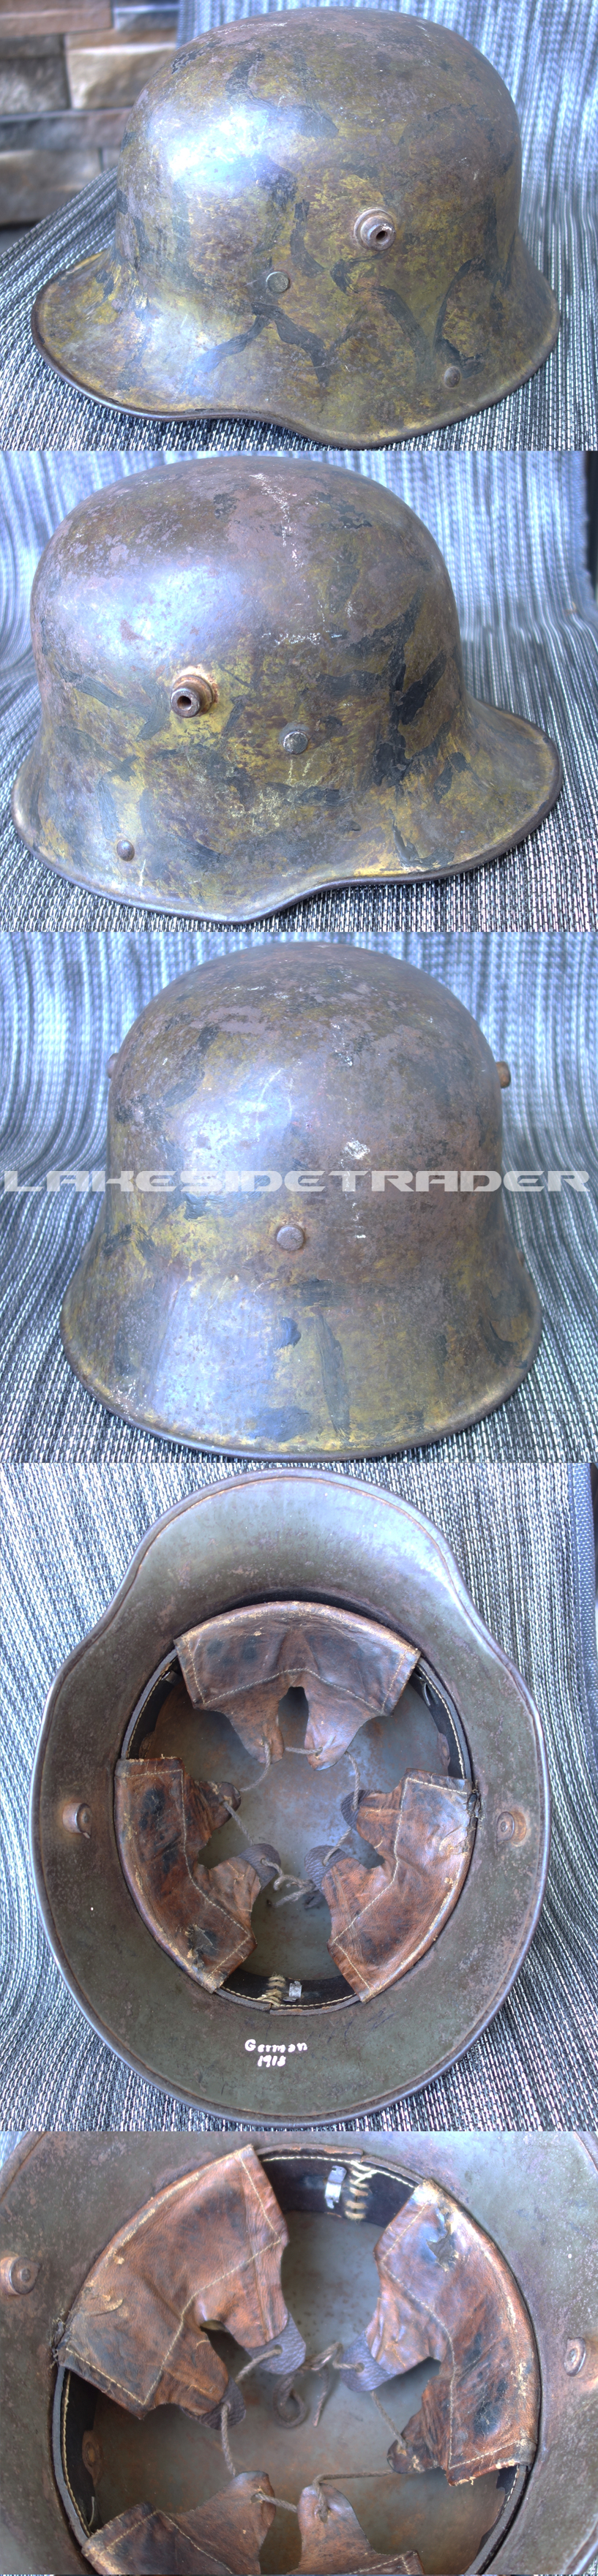 M16 Camo Helmet by BF62